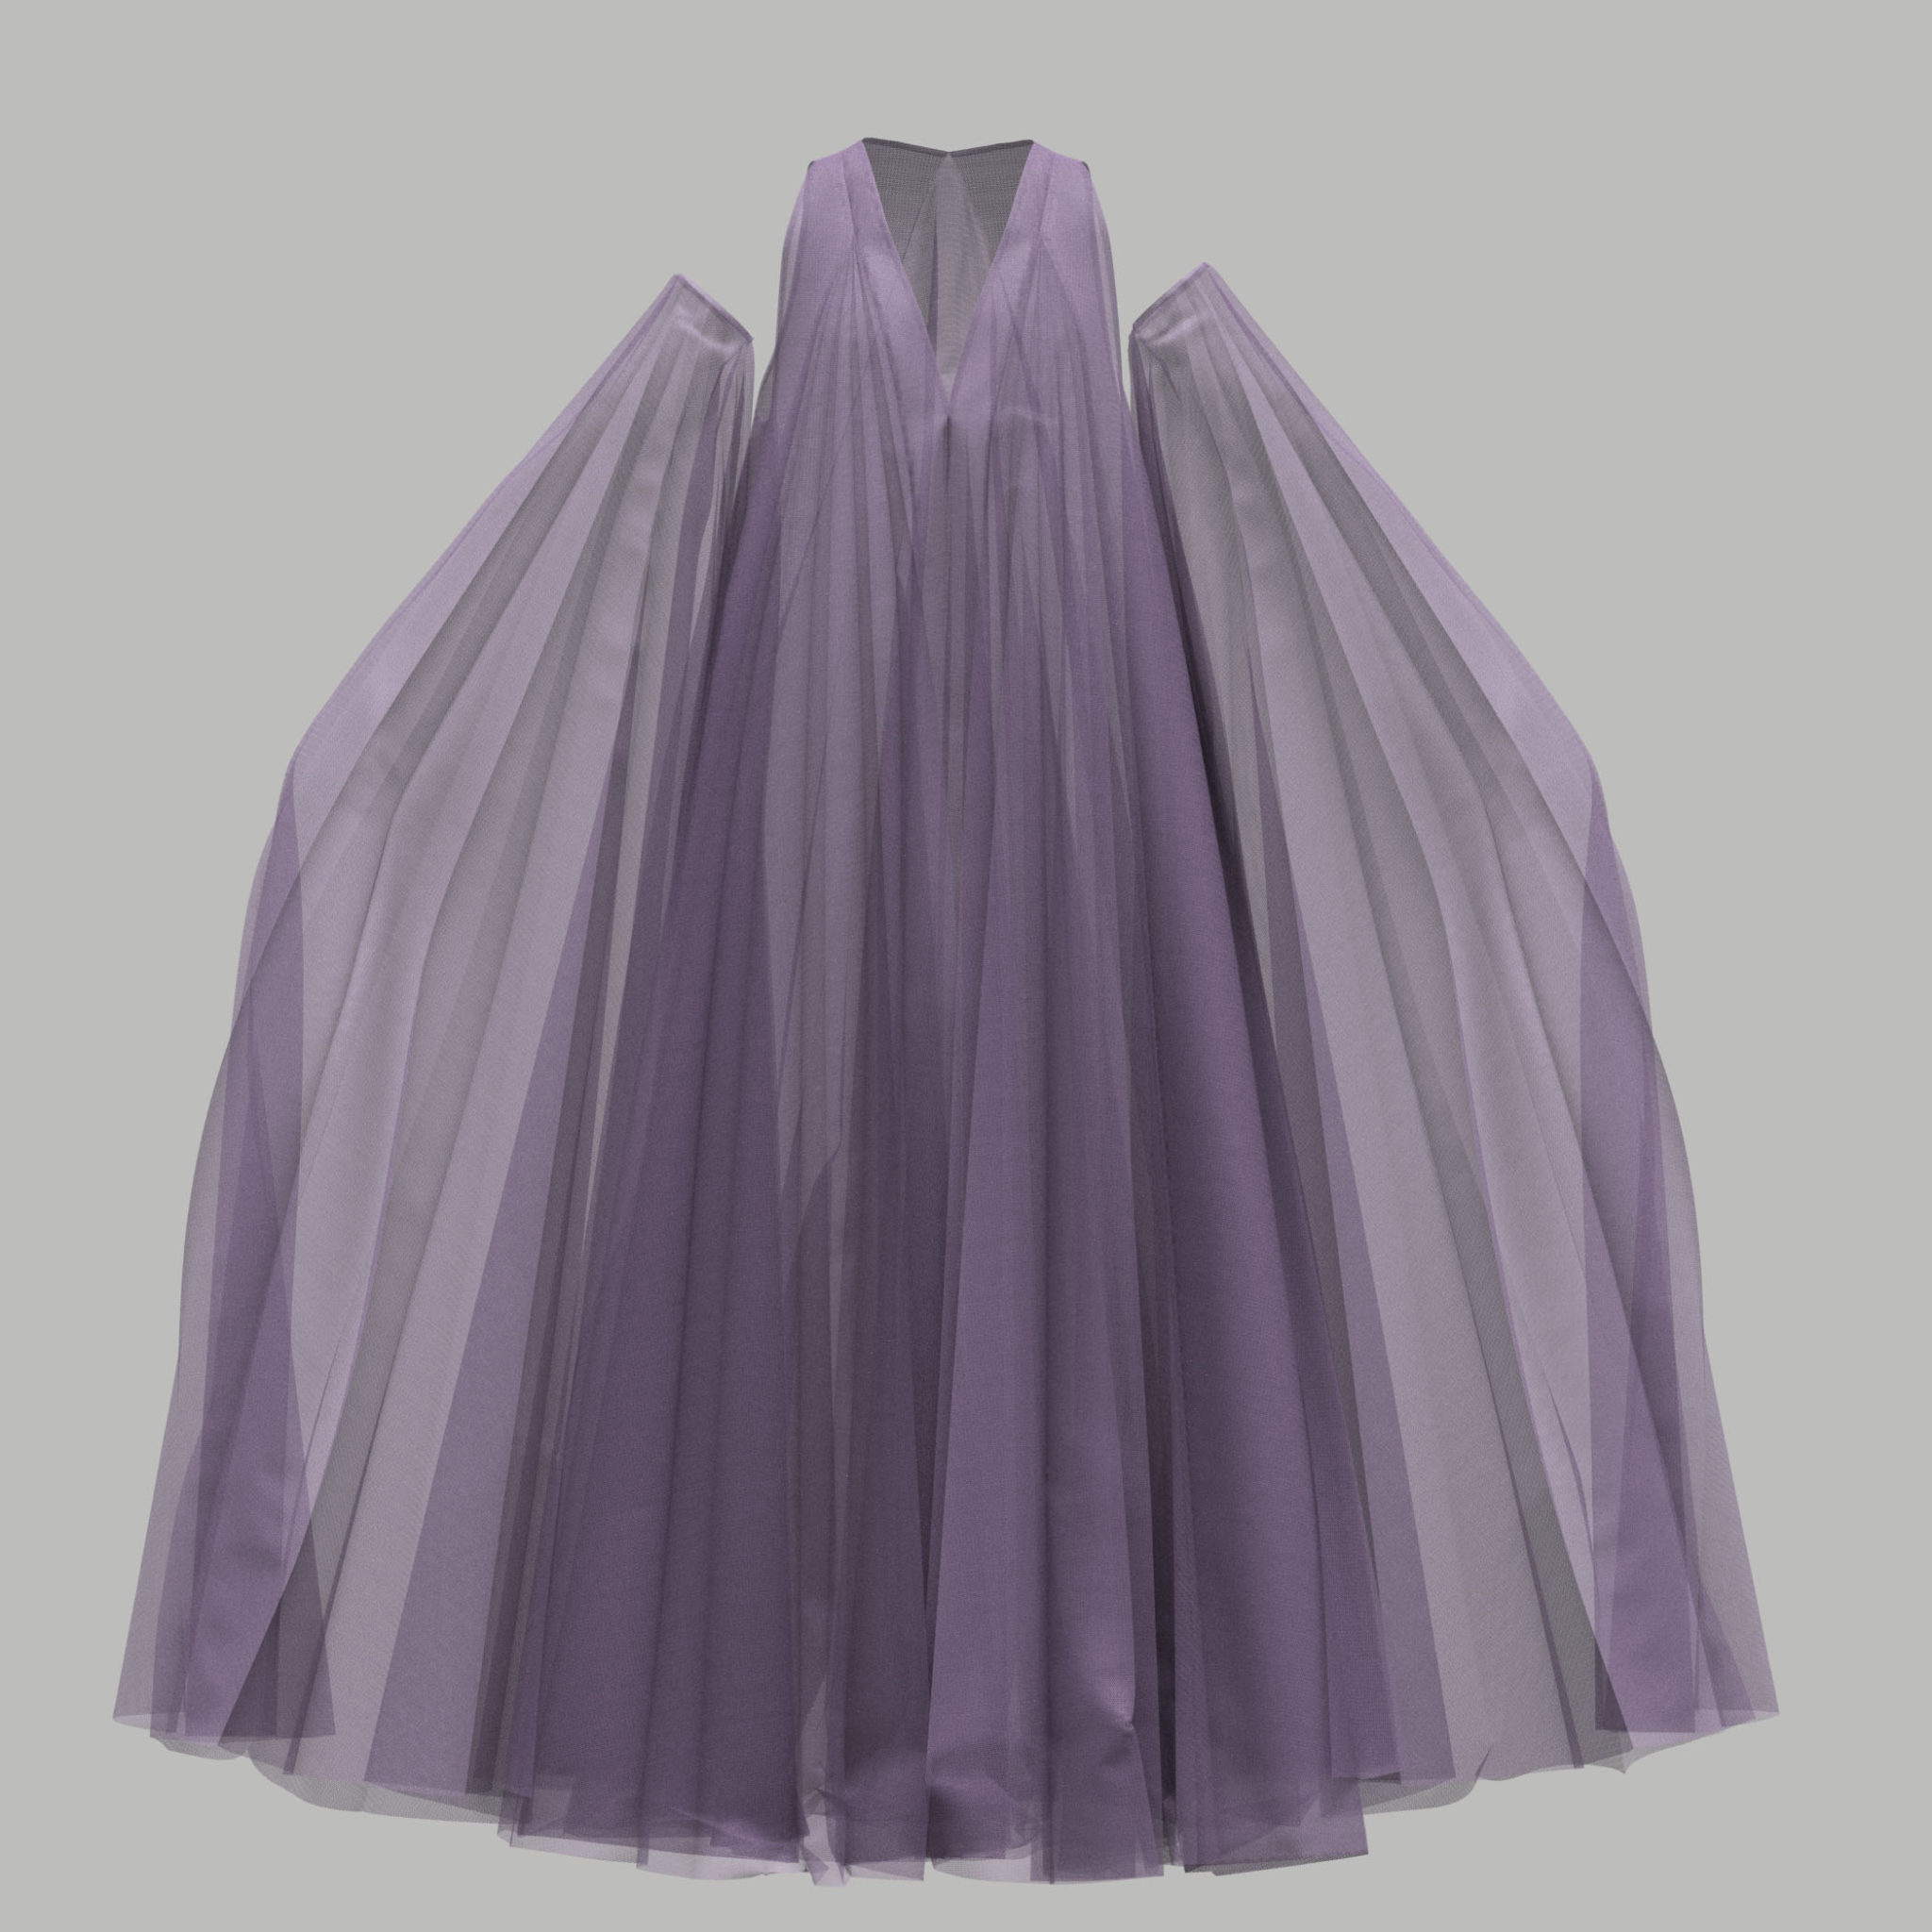 Digital tulle dress